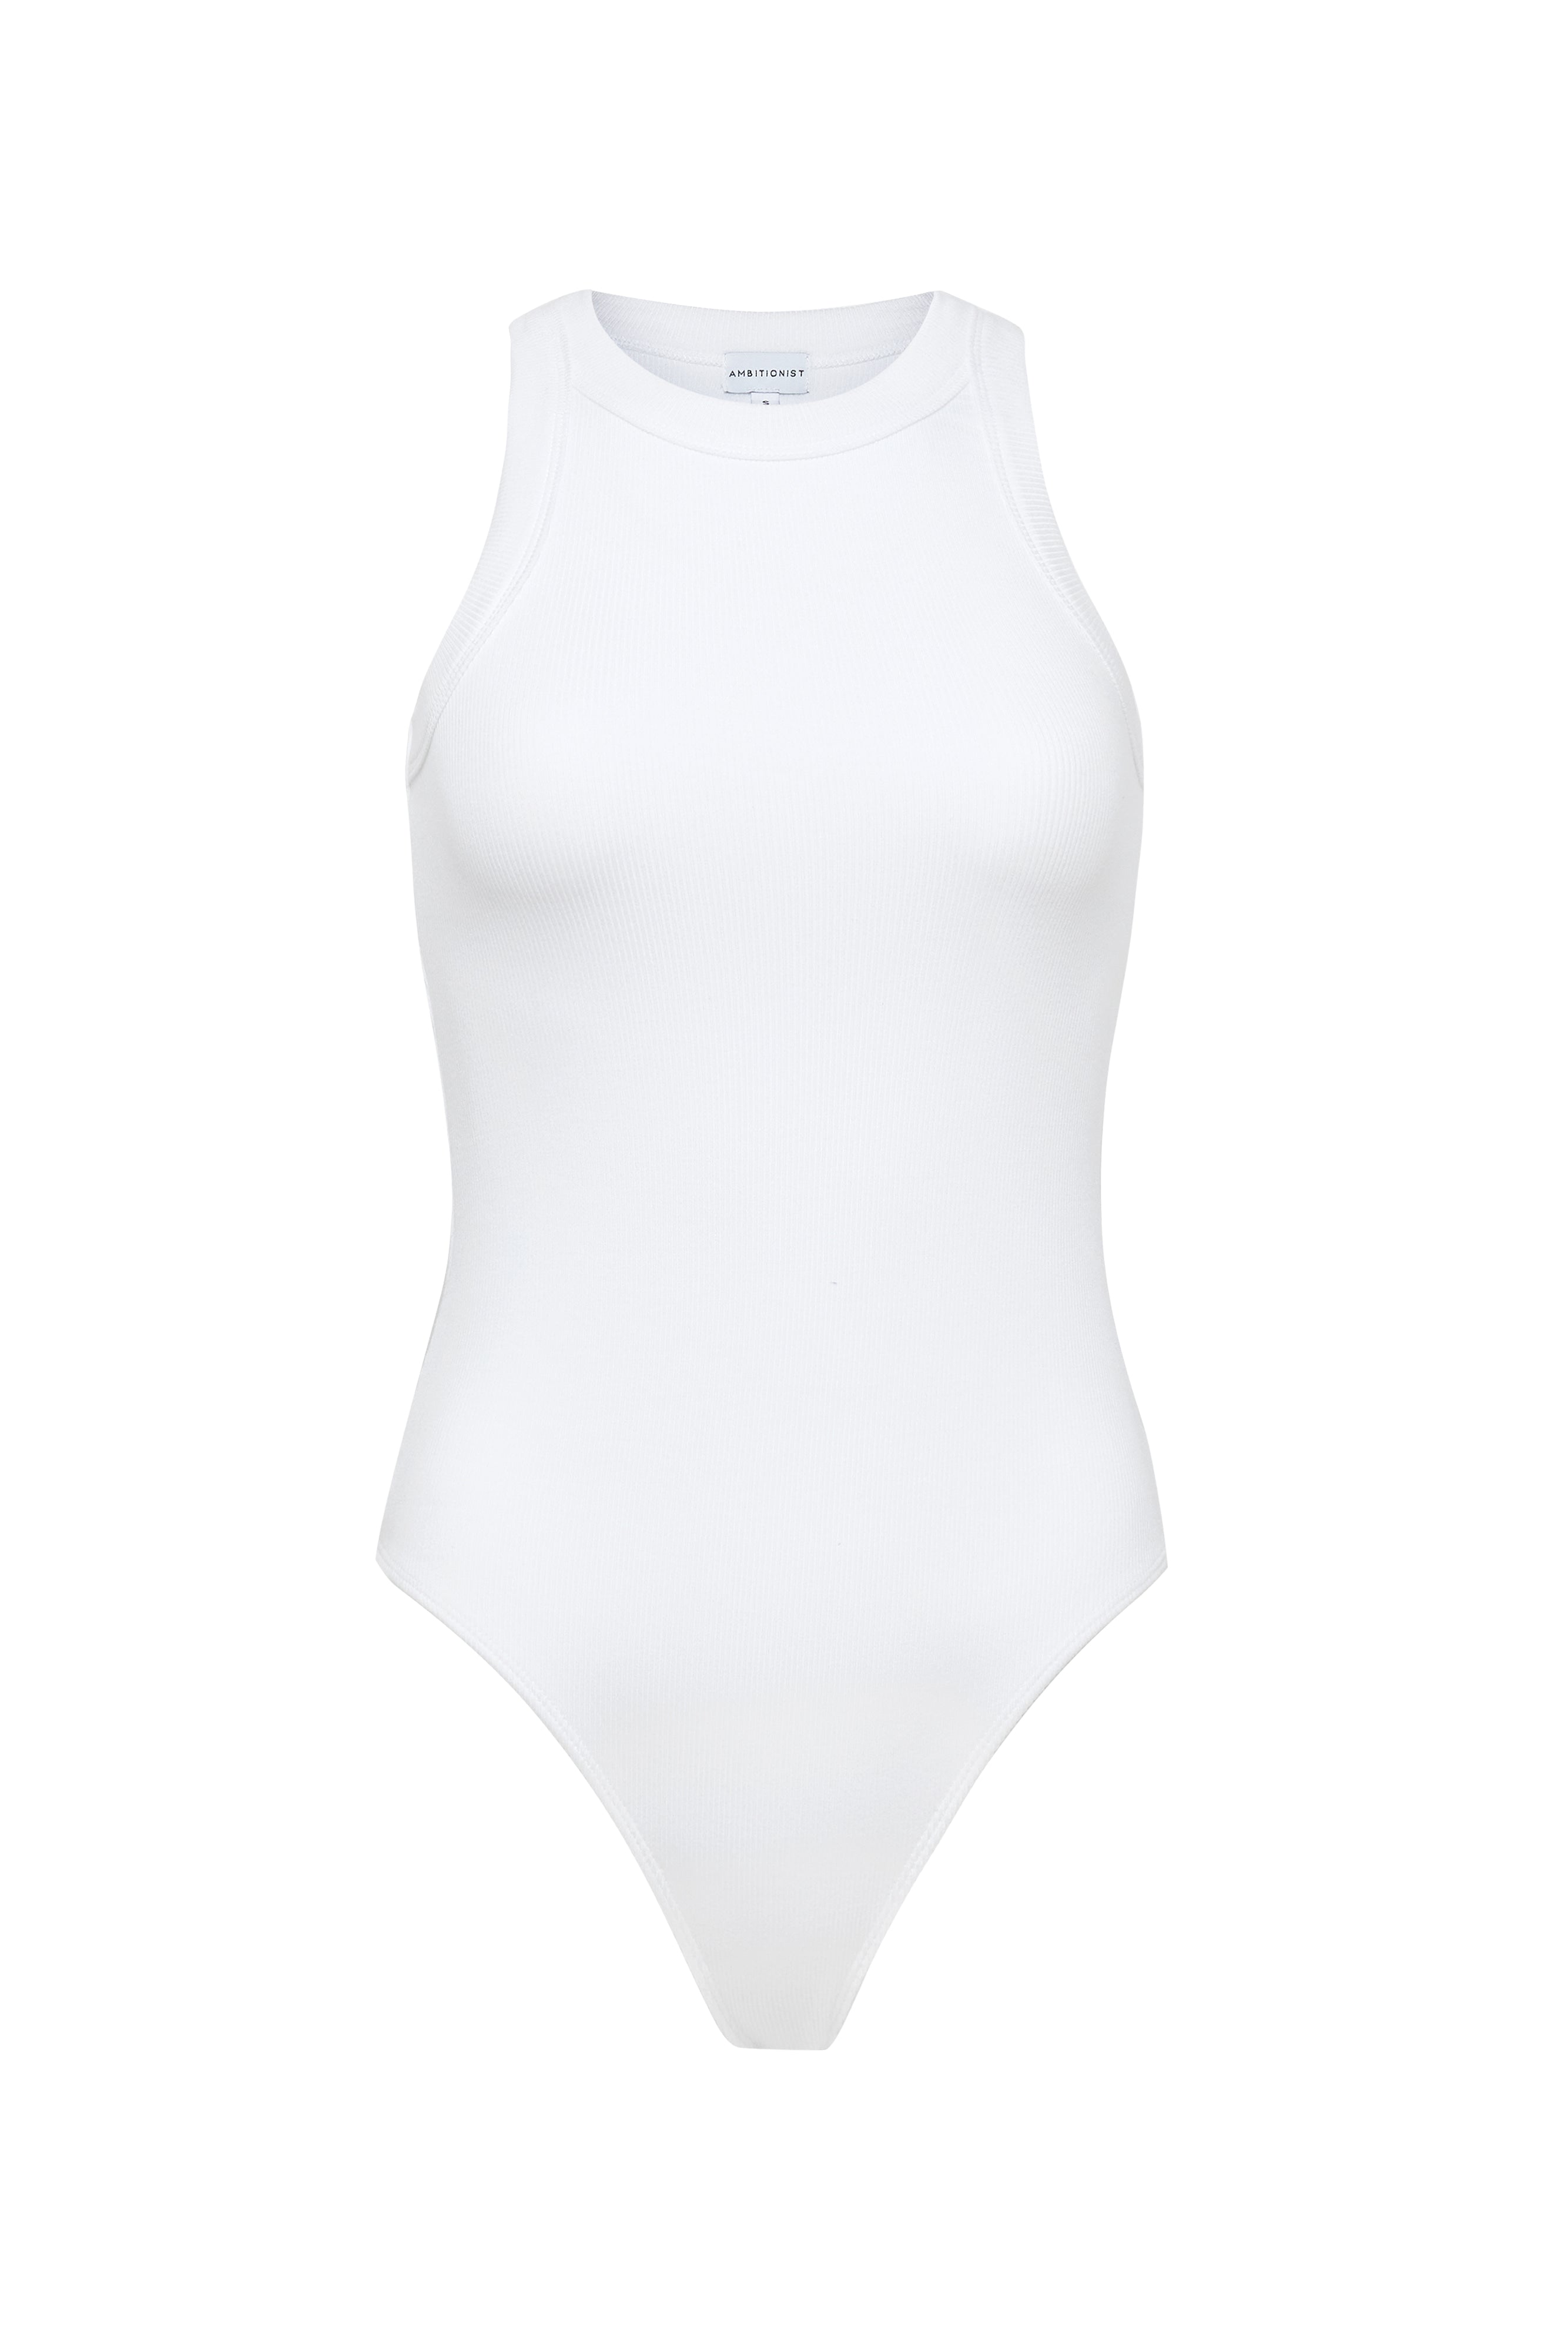 MISSJOY Women's Bodysuits for Going Out Ribbed Halter Neck Racerback White Body  suit Tank Tops